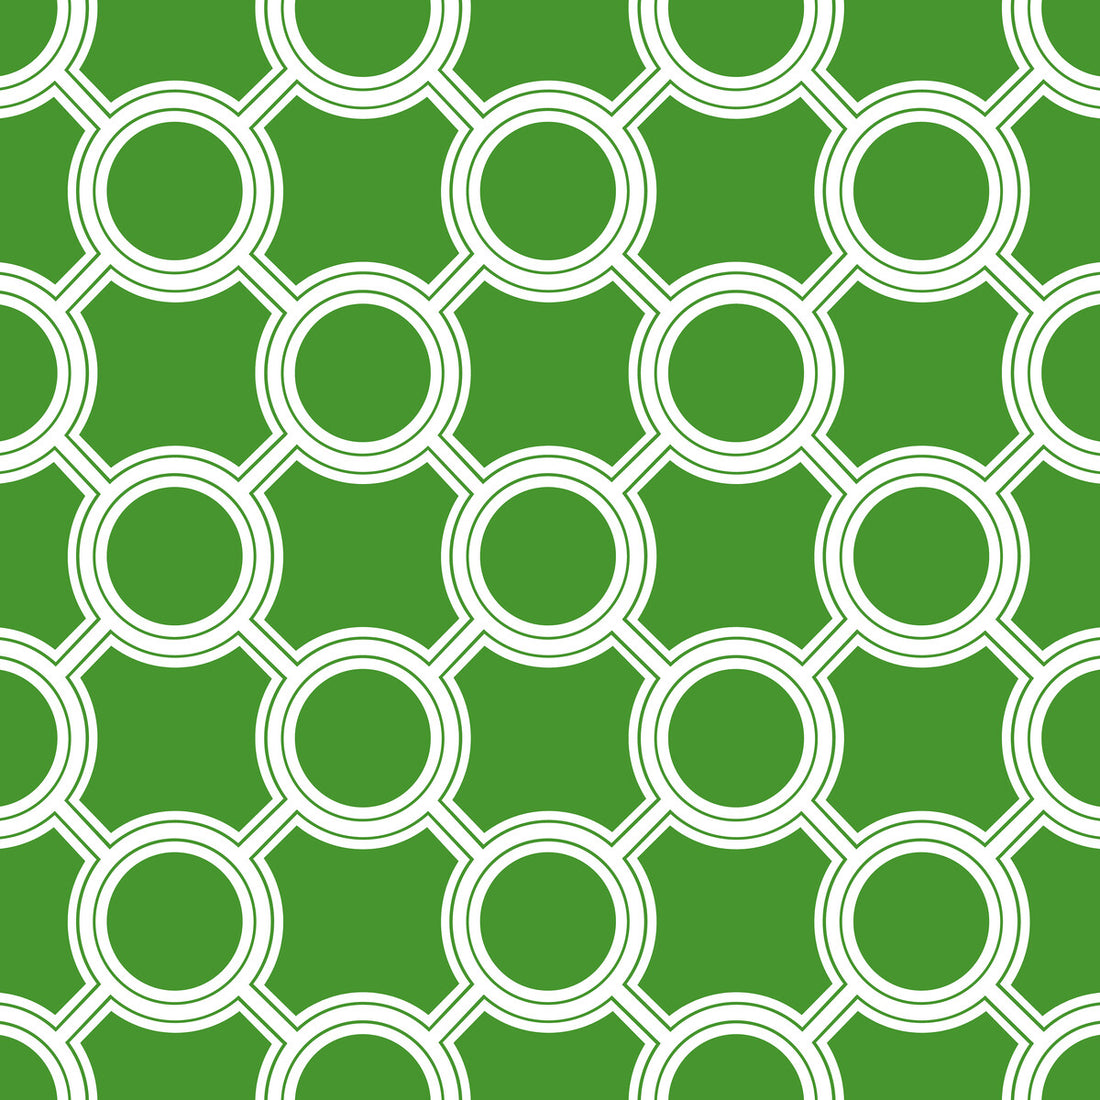 Aymara fabric in verde color - pattern GDT5600.002.0 - by Gaston y Daniela in the Gaston Nuevo Mundo collection